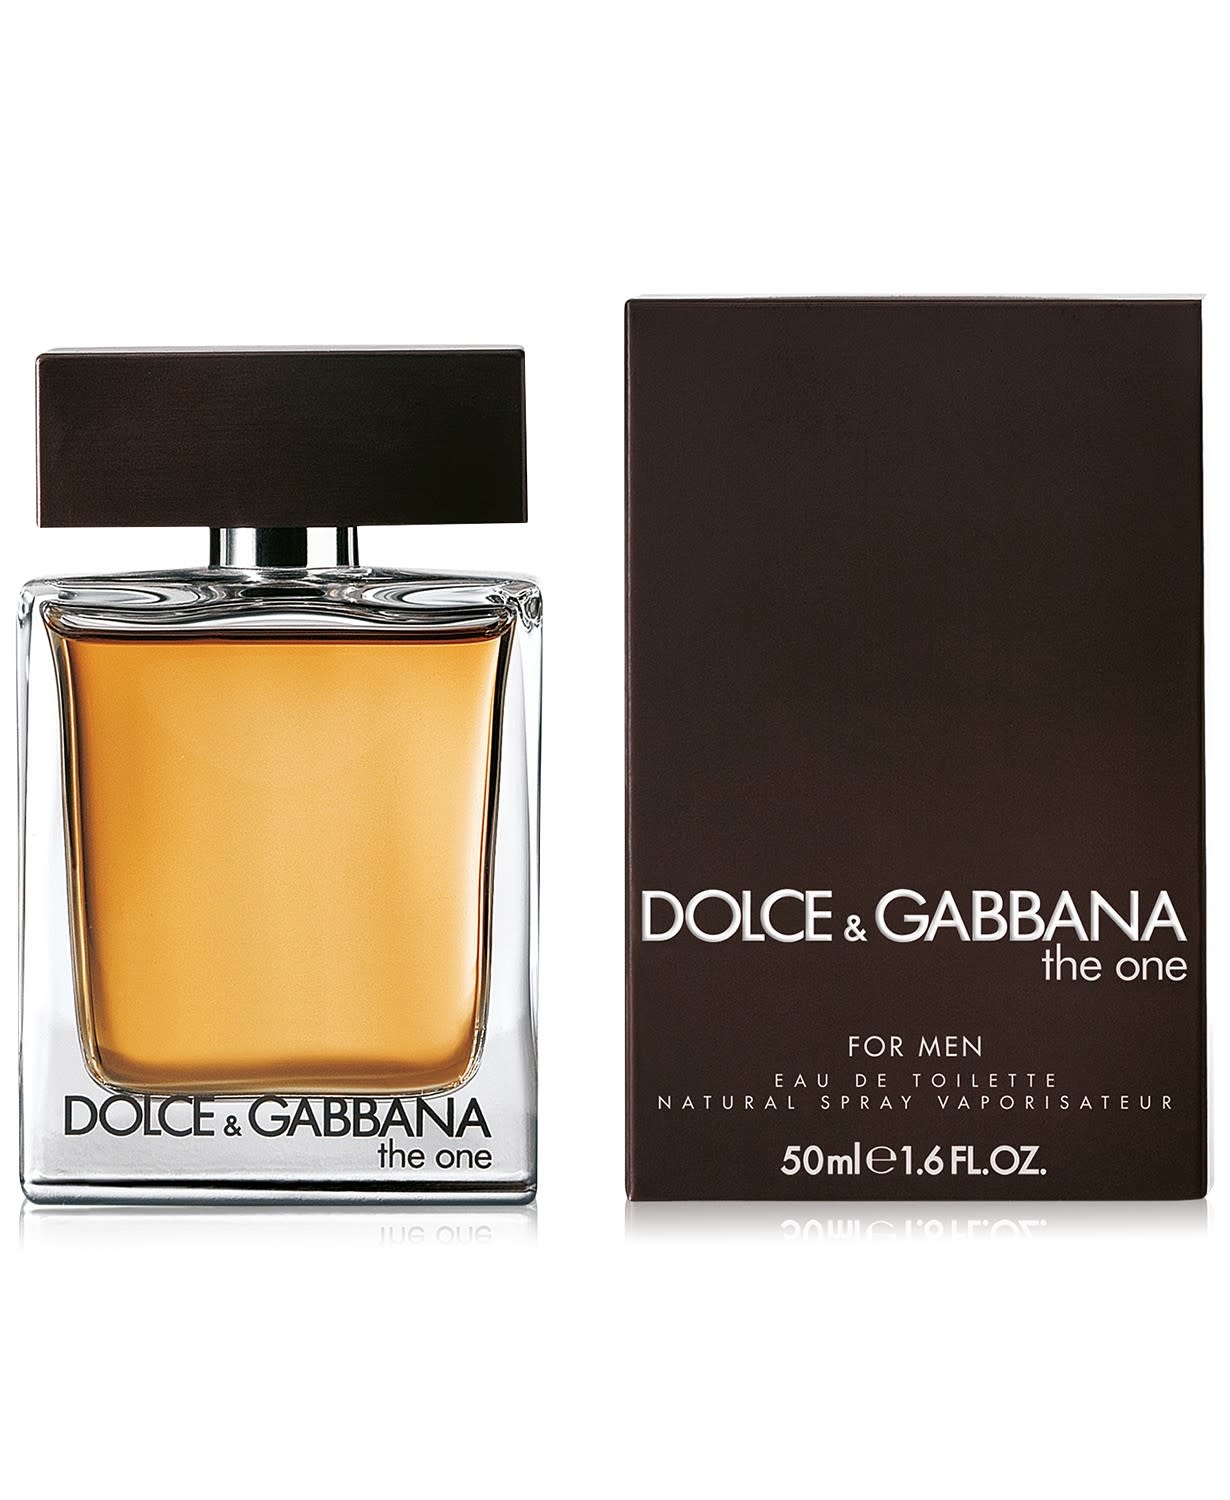 Дольче габбана мужские отзывы. Dolce&Gabbana the one for men Toilette 100 ml. Dolce Gabbana the one for men 100 мл. Дольче Габбана the one 100ml. Dolce Gabbana the one for men 100ml EDT.